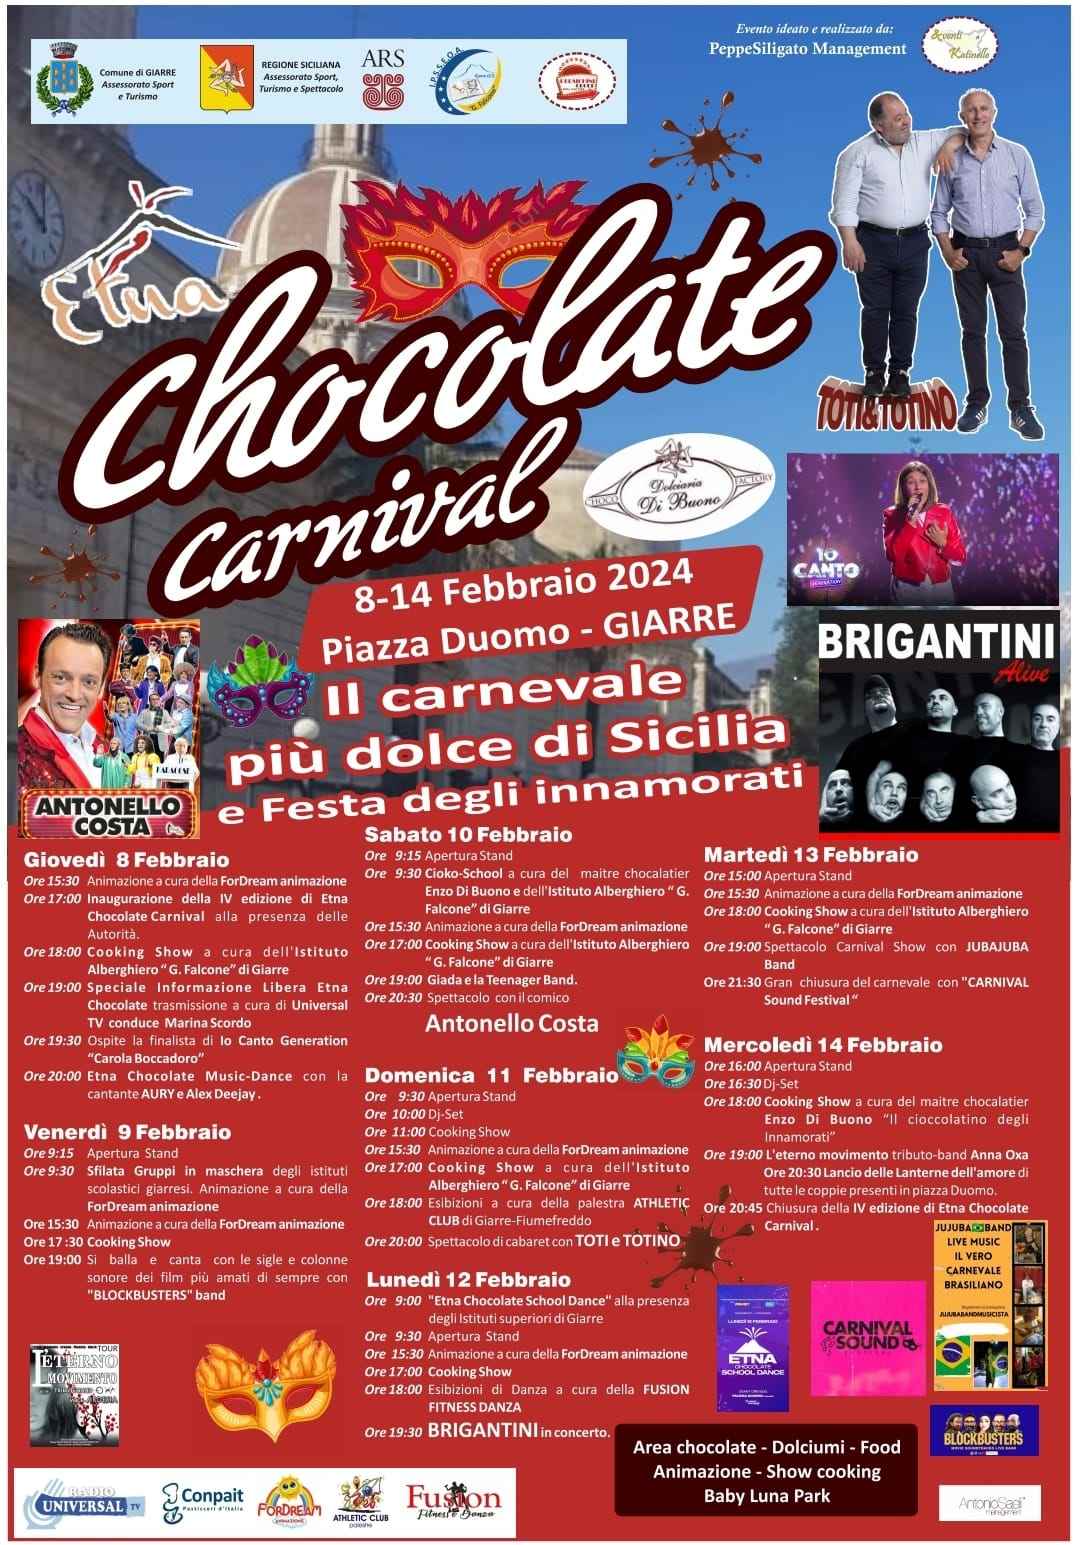 Giarre (CT) "Etna Chocolate" dal 24 al 27 Febbraio 2022 
